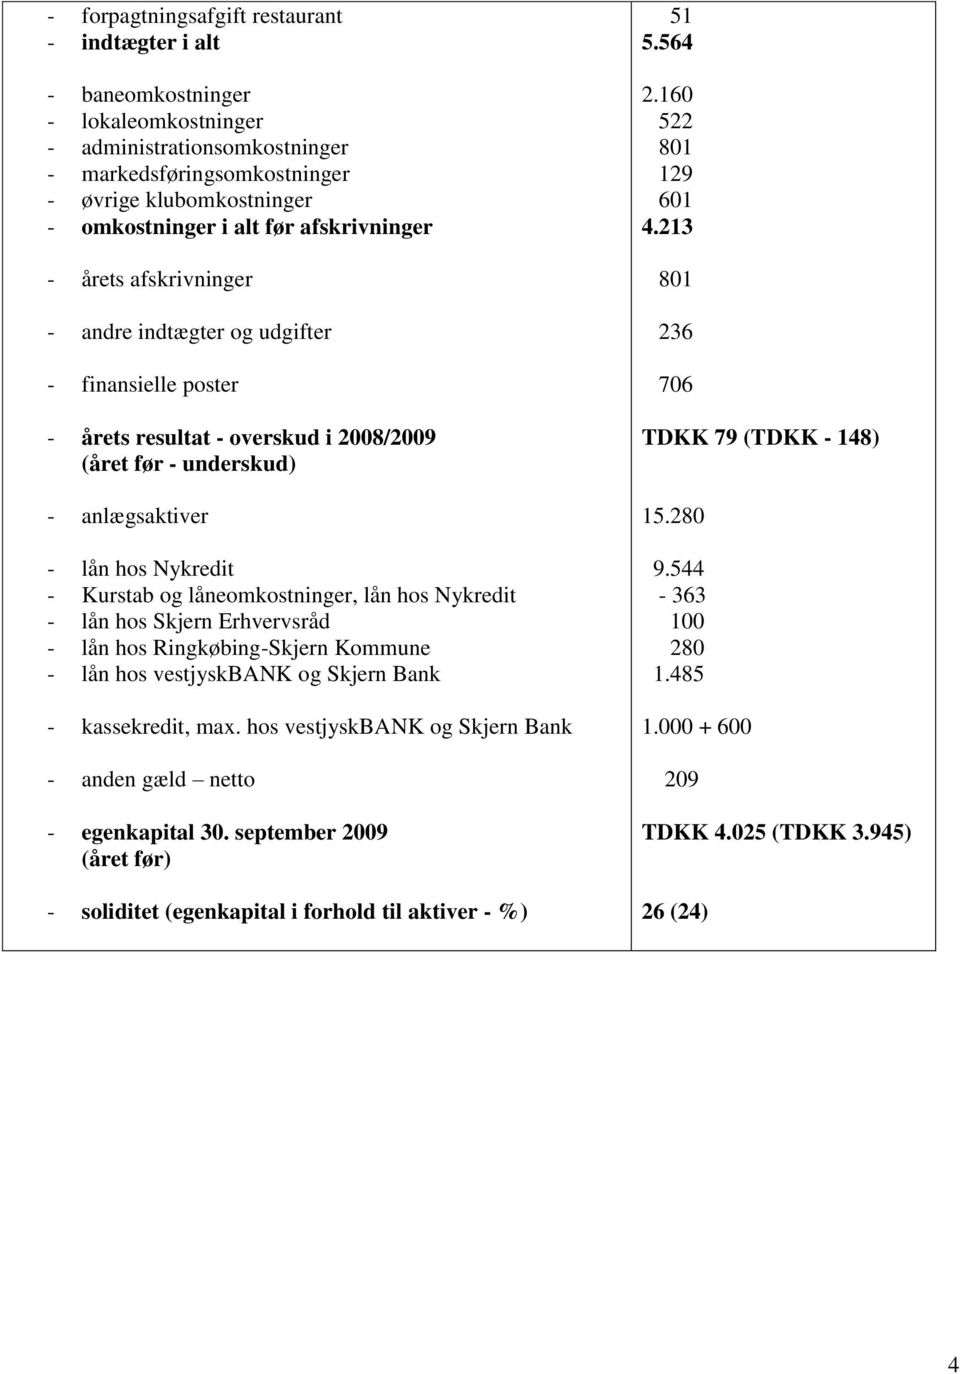 låneomkostninger, lån hos Nykredit - lån hos Skjern Erhvervsråd - lån hos Ringkøbing-Skjern Kommune - lån hos vestjyskbank og Skjern Bank - kassekredit, max.